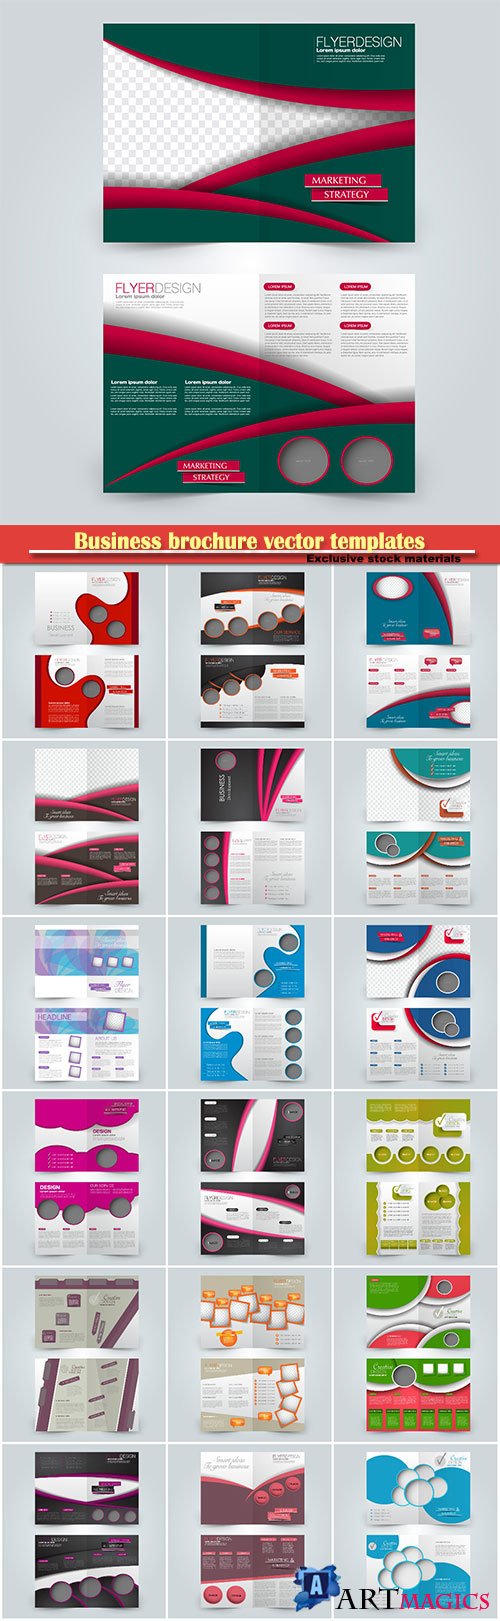 Business brochure vector templates, magazine cover, business mockup, education, presentation, report # 51